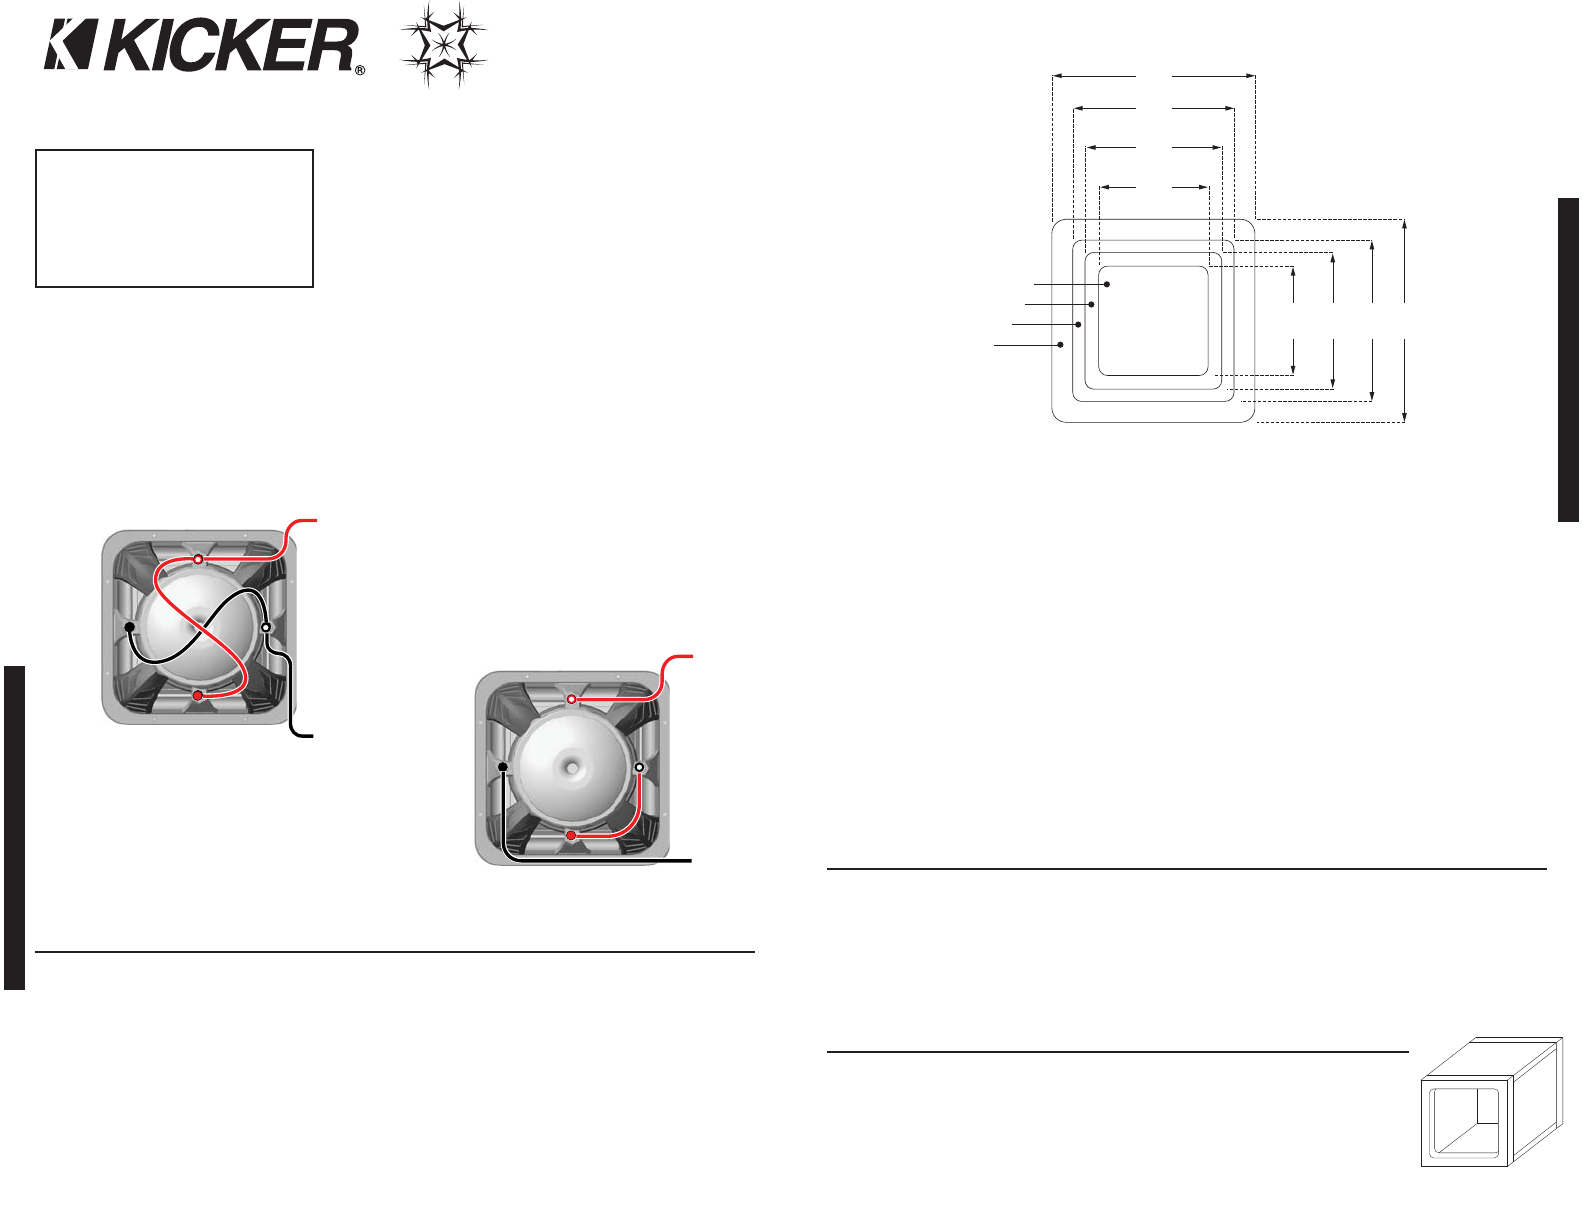 Kicker L7 Subwoofer Wiring Diagram from usermanual.wiki